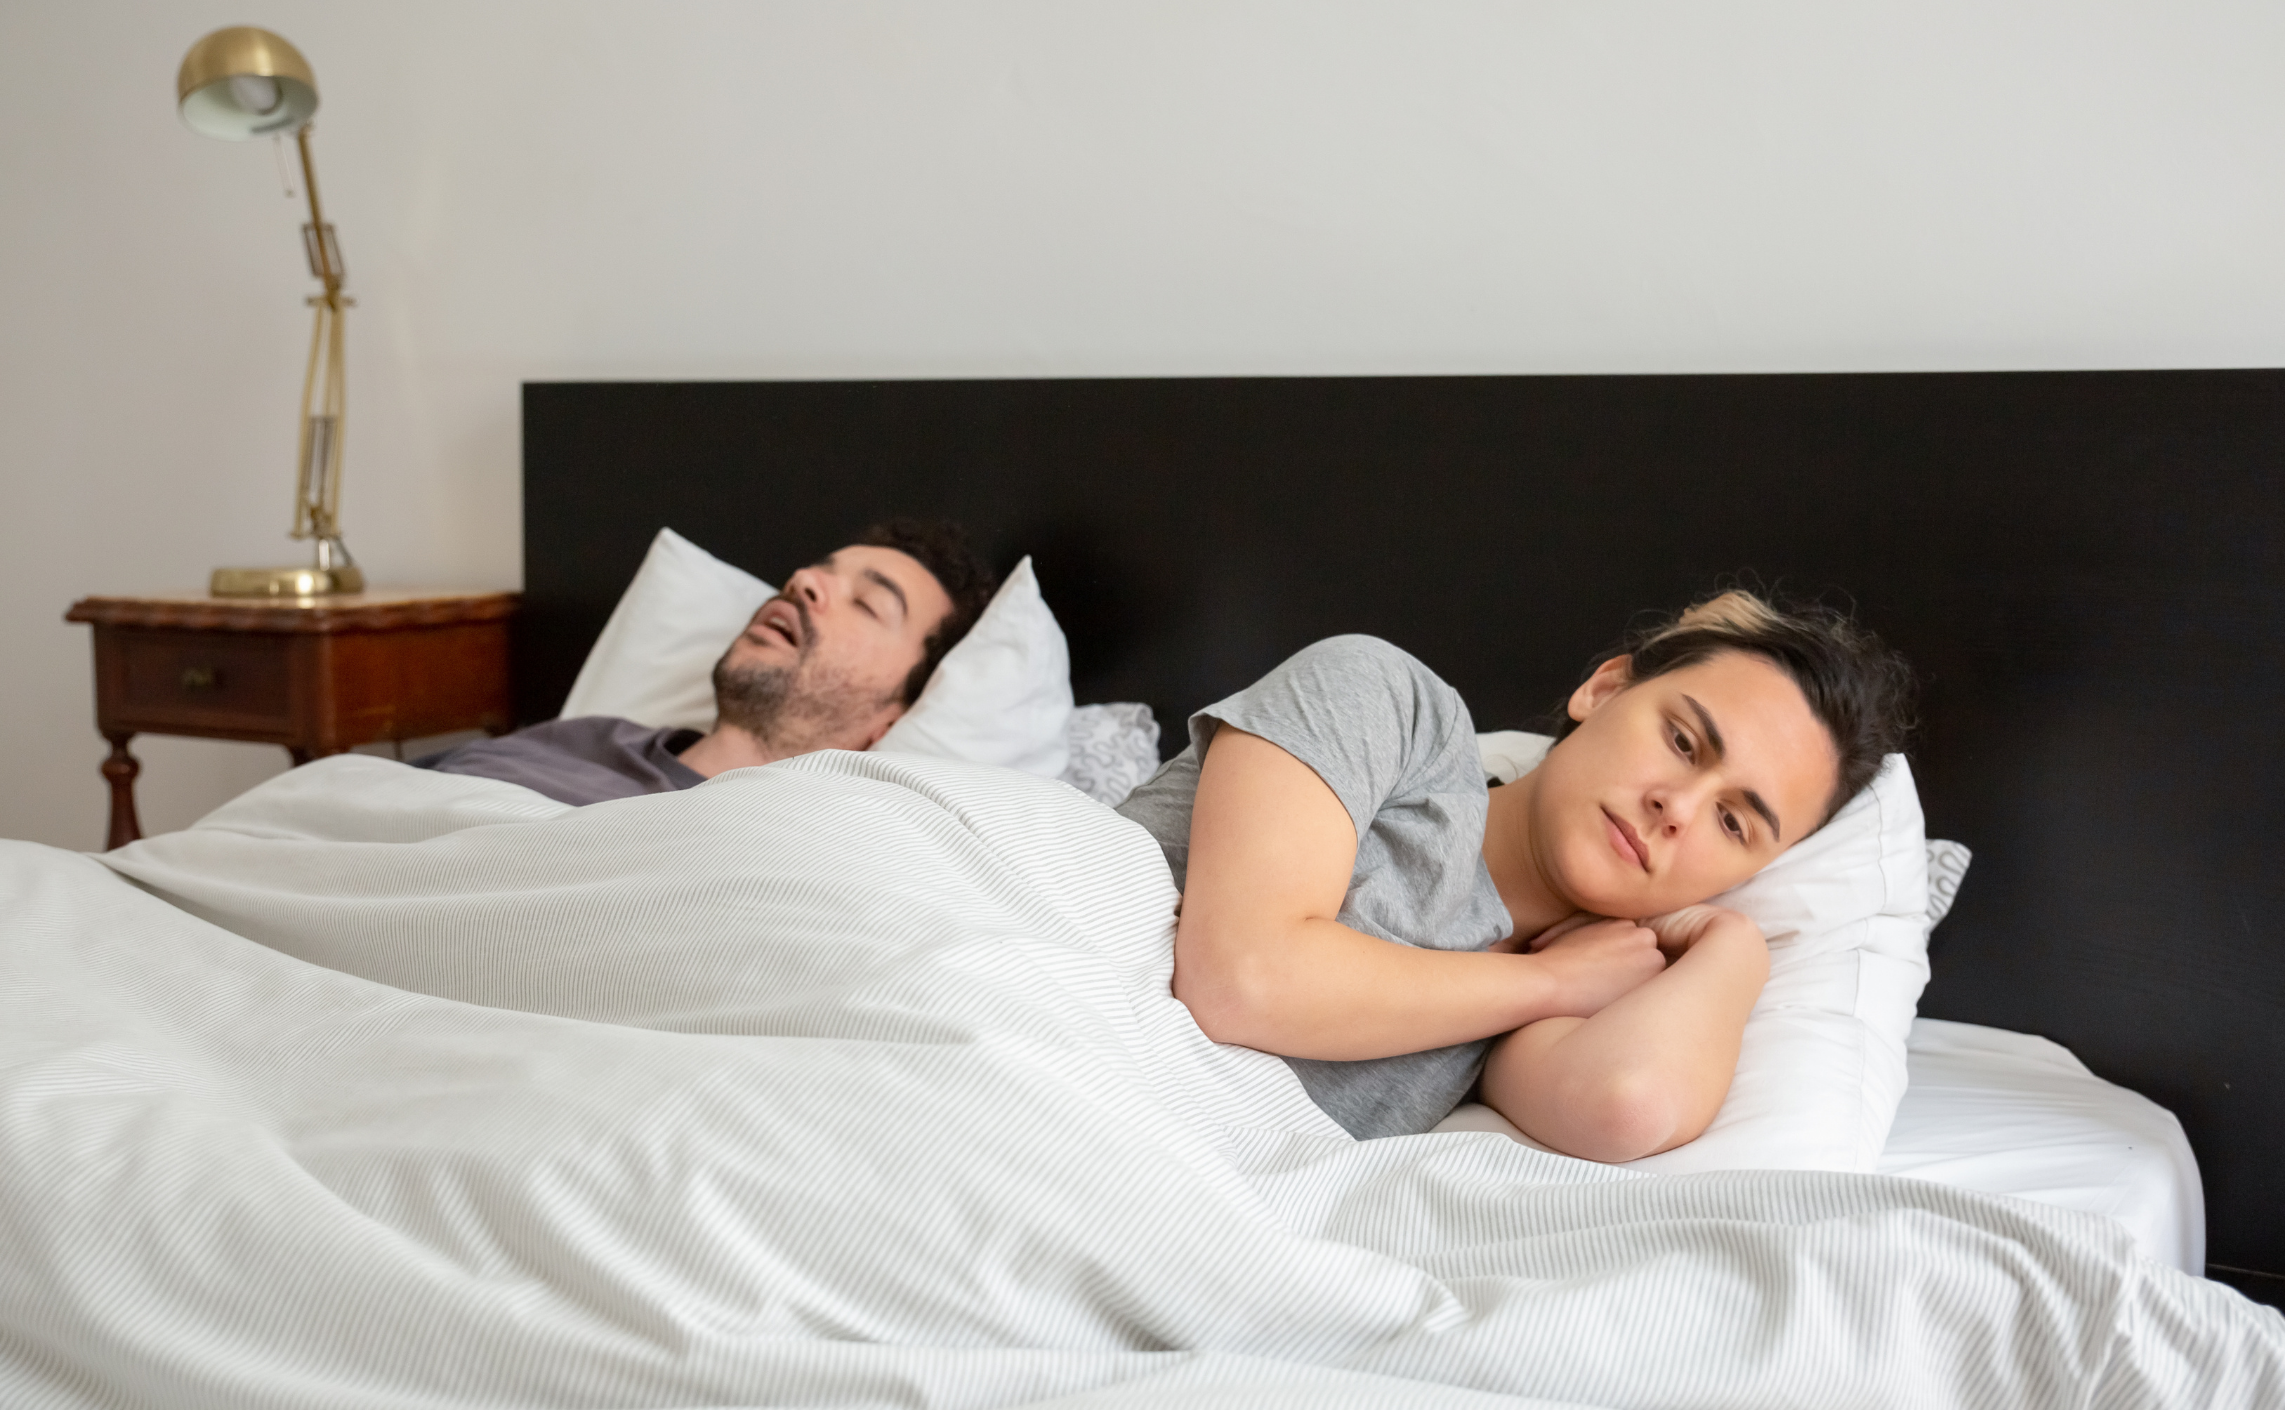 Man snoring while sleep next to woman